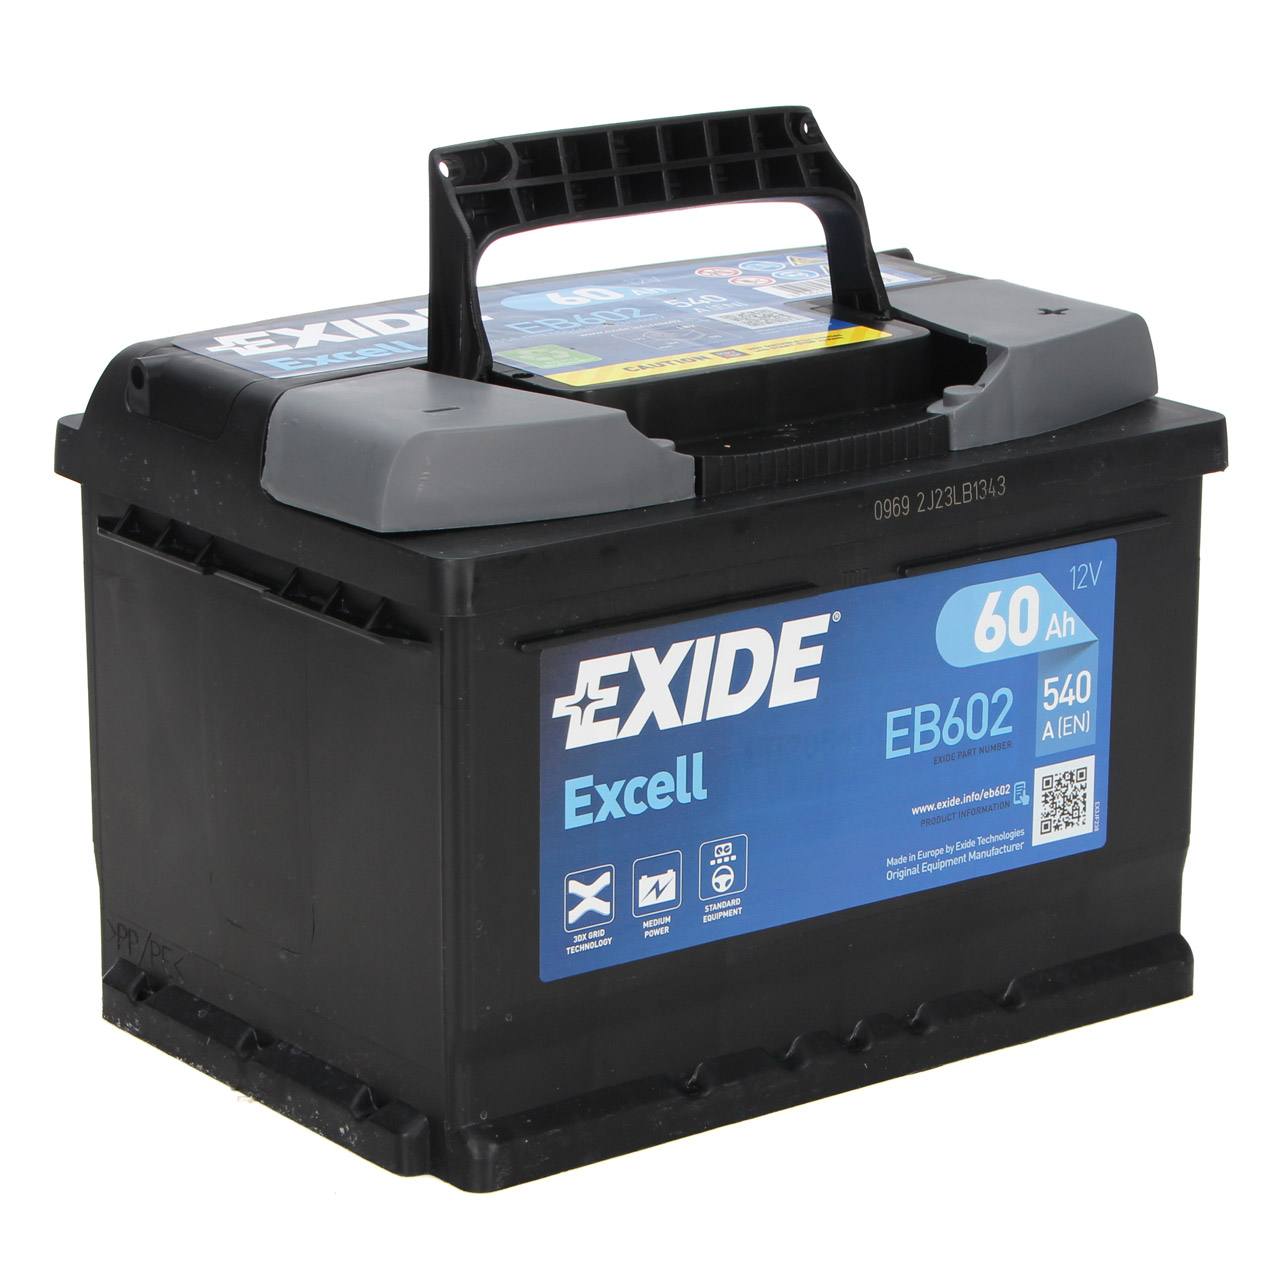 EXIDE EB740 EXCELL Autobatterie Batterie Starterbatterie 12V 74Ah EN680A